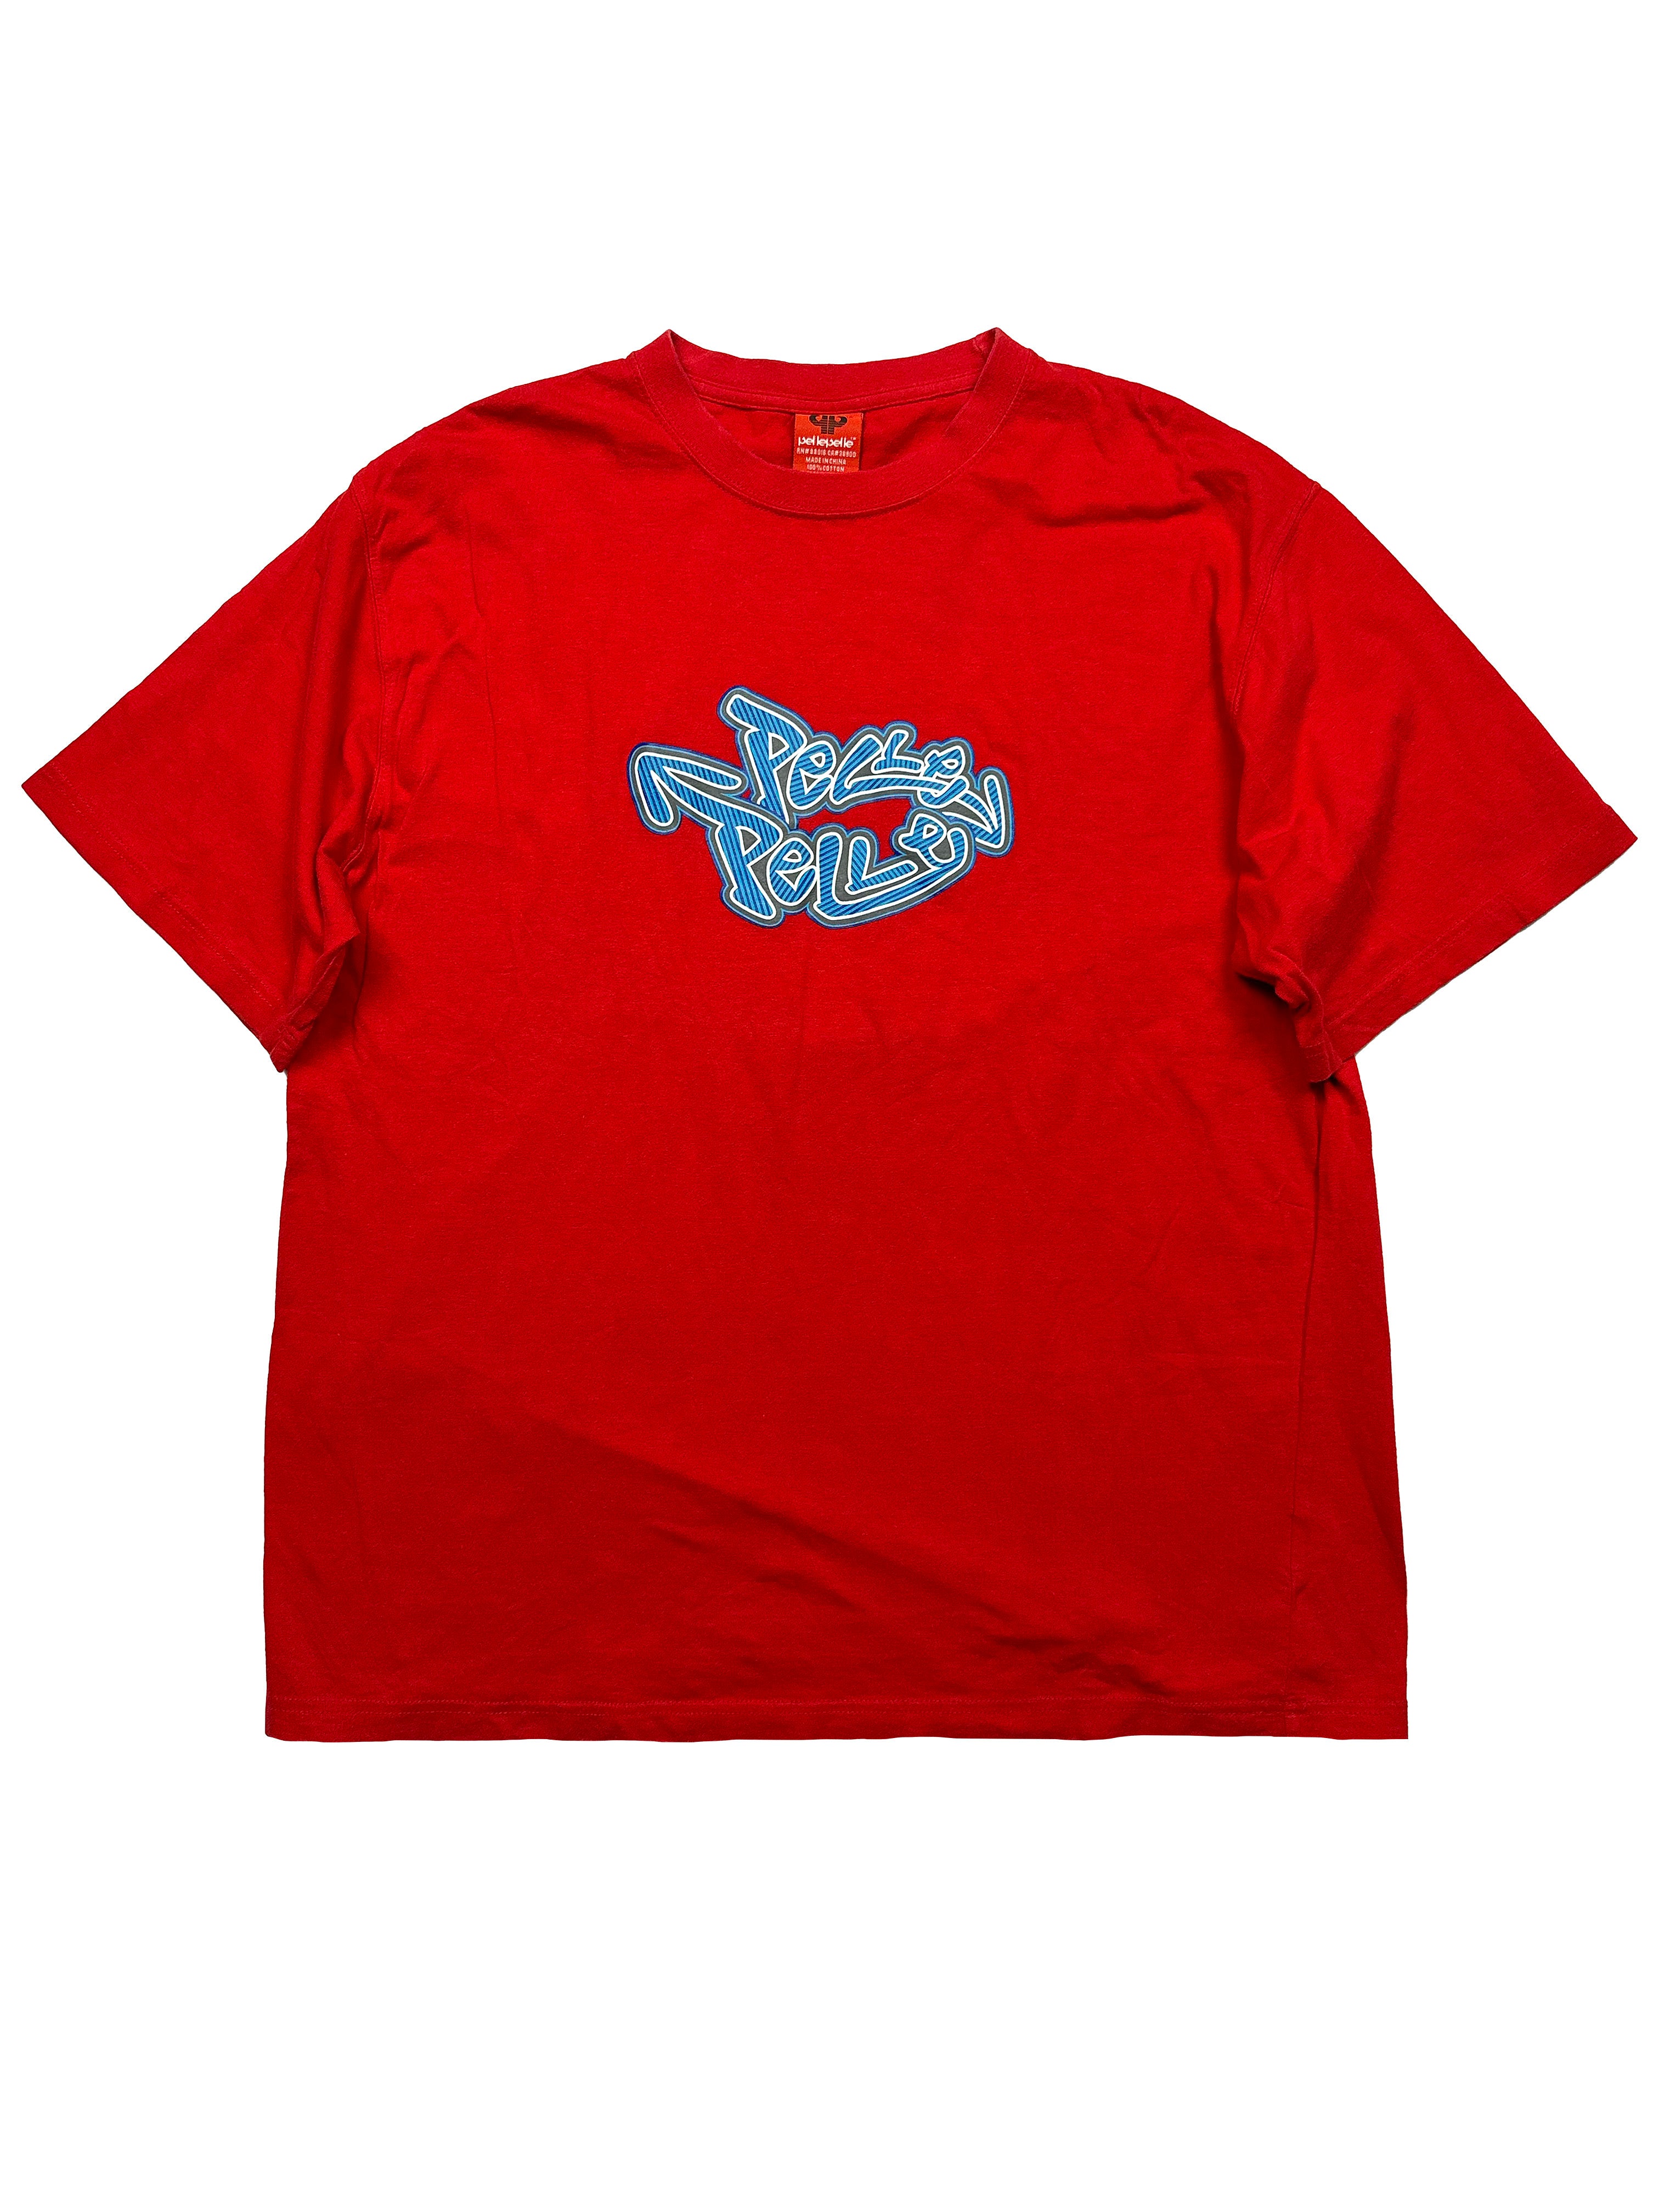 Pelle Pelle Red Spell Out T-shirt 00's